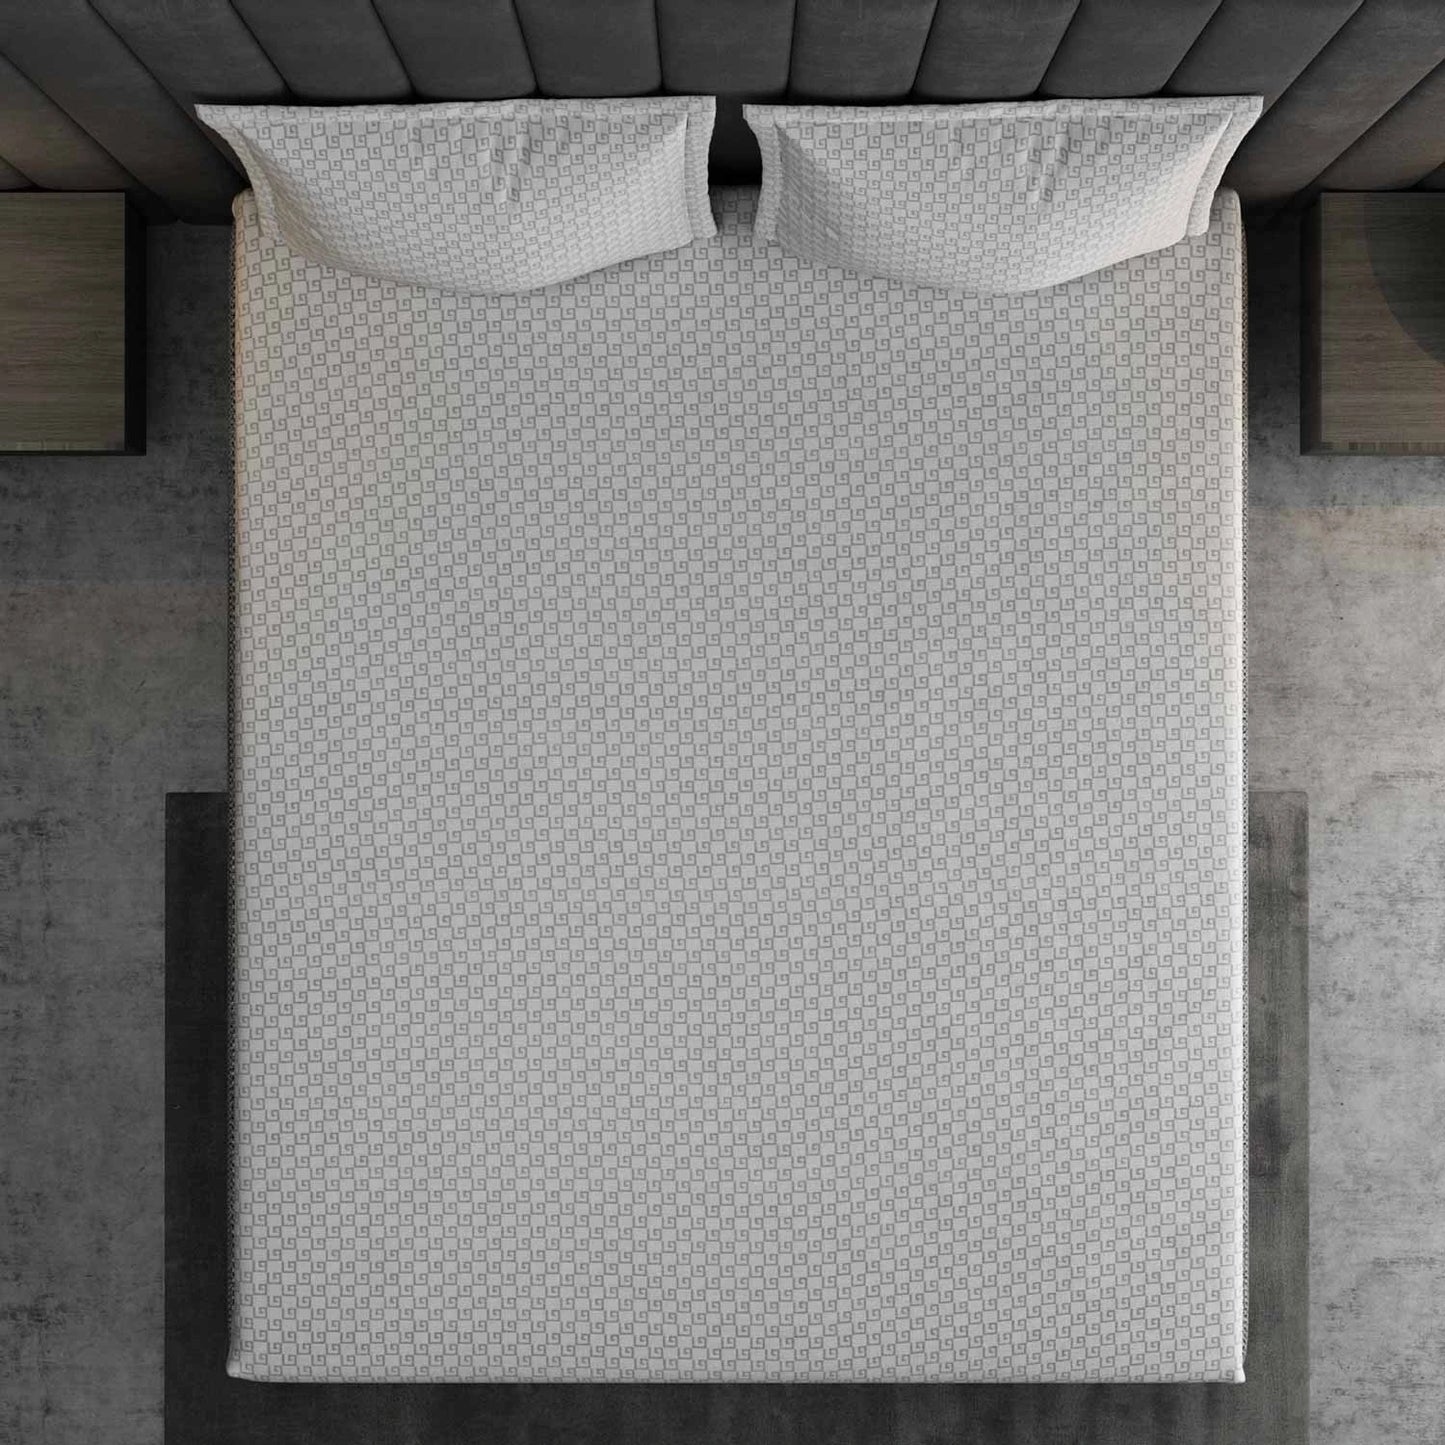 Organic Cotton Bedsheets